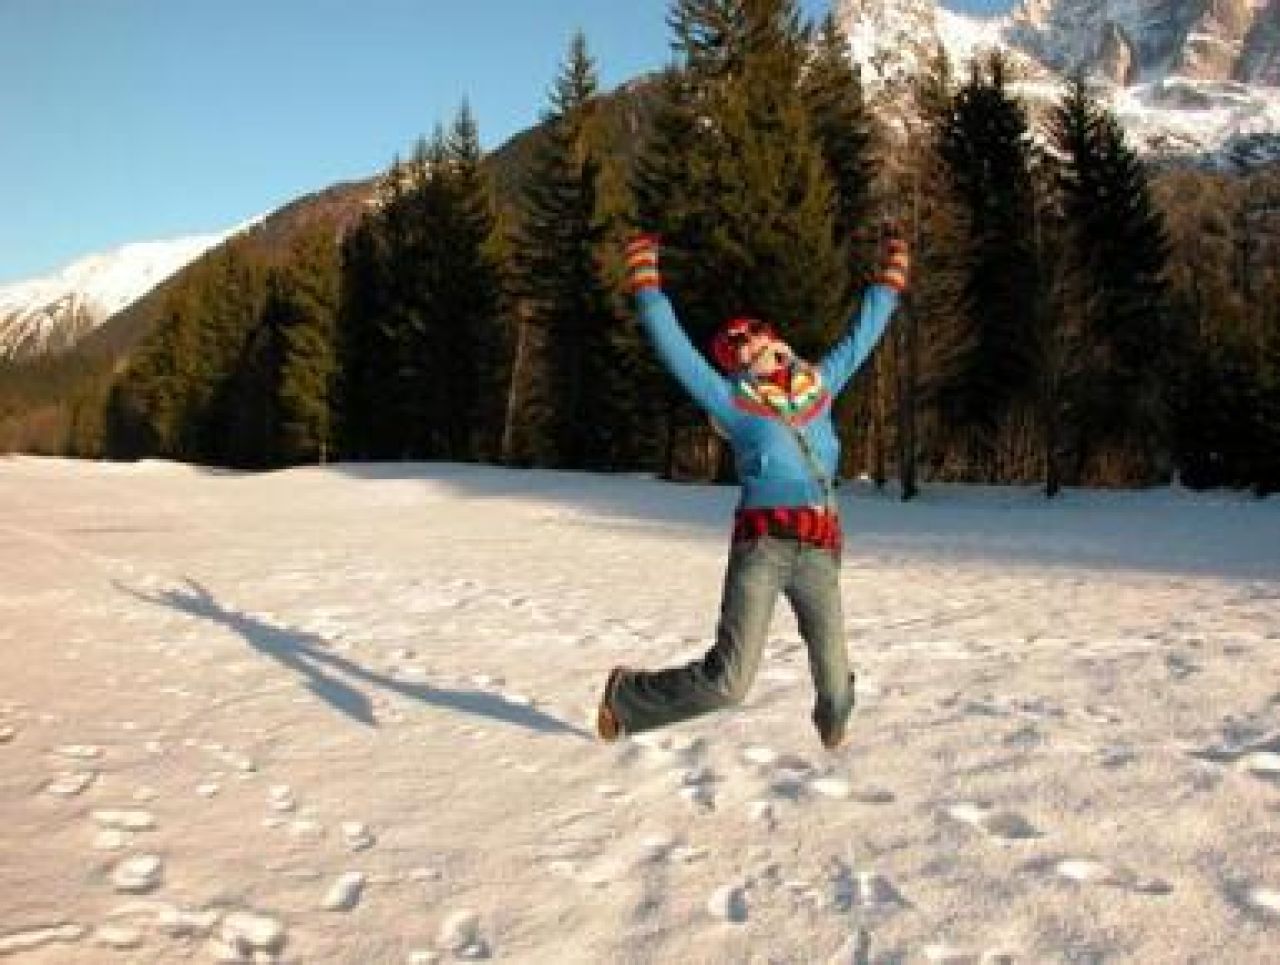 Ski and Dance - jazda na nartach i taniec